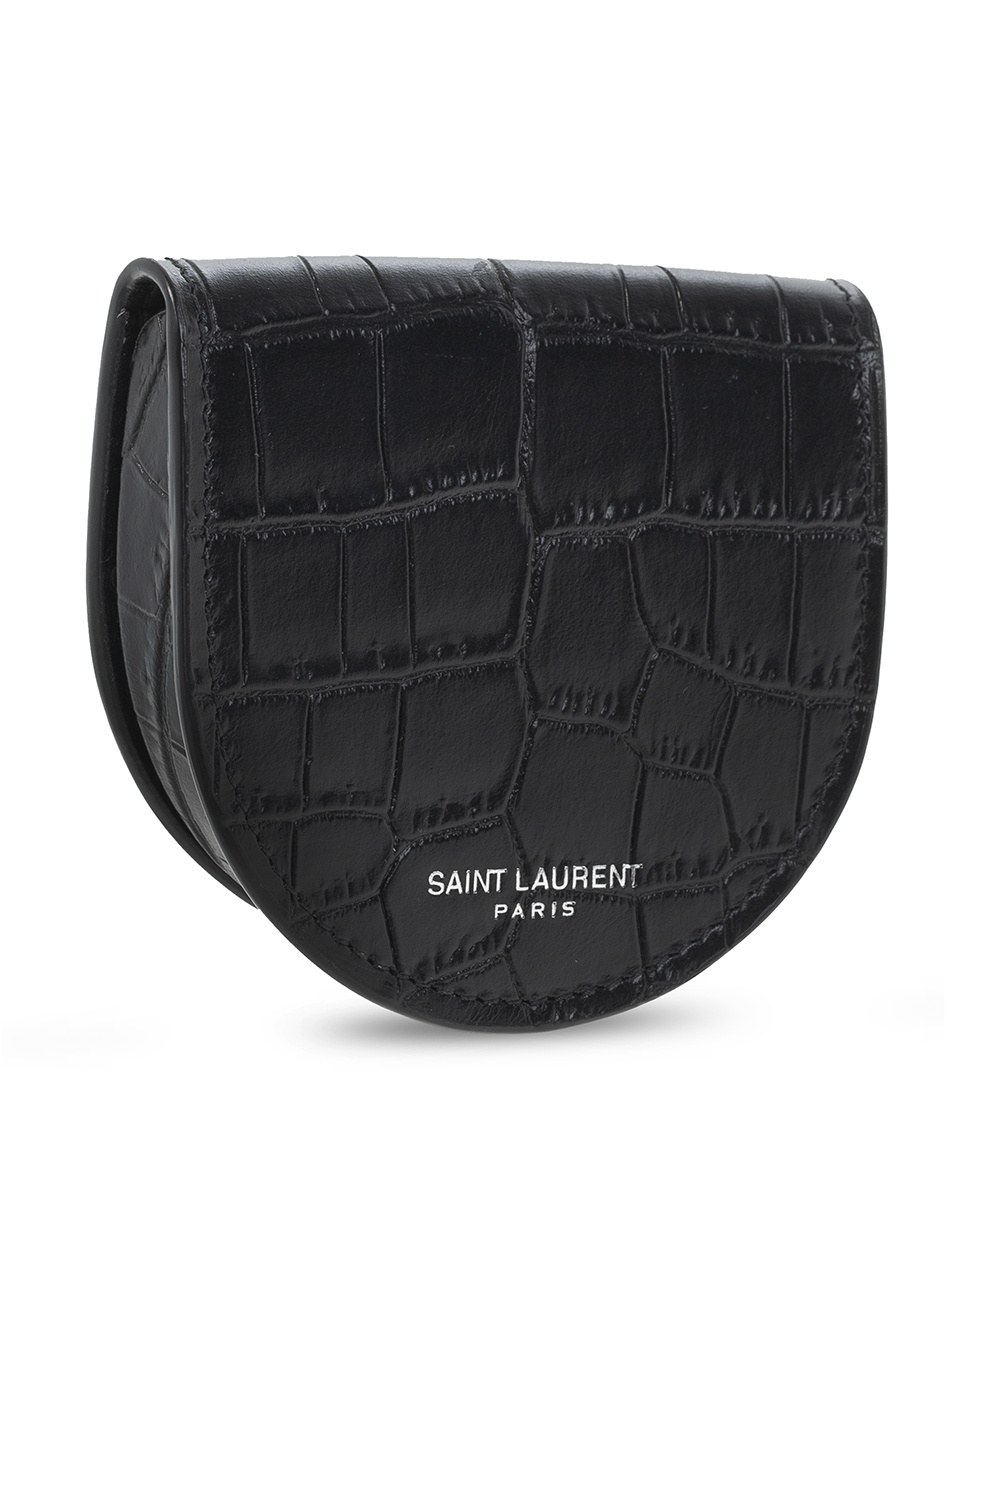 Saint Laurent Coin purse with logo